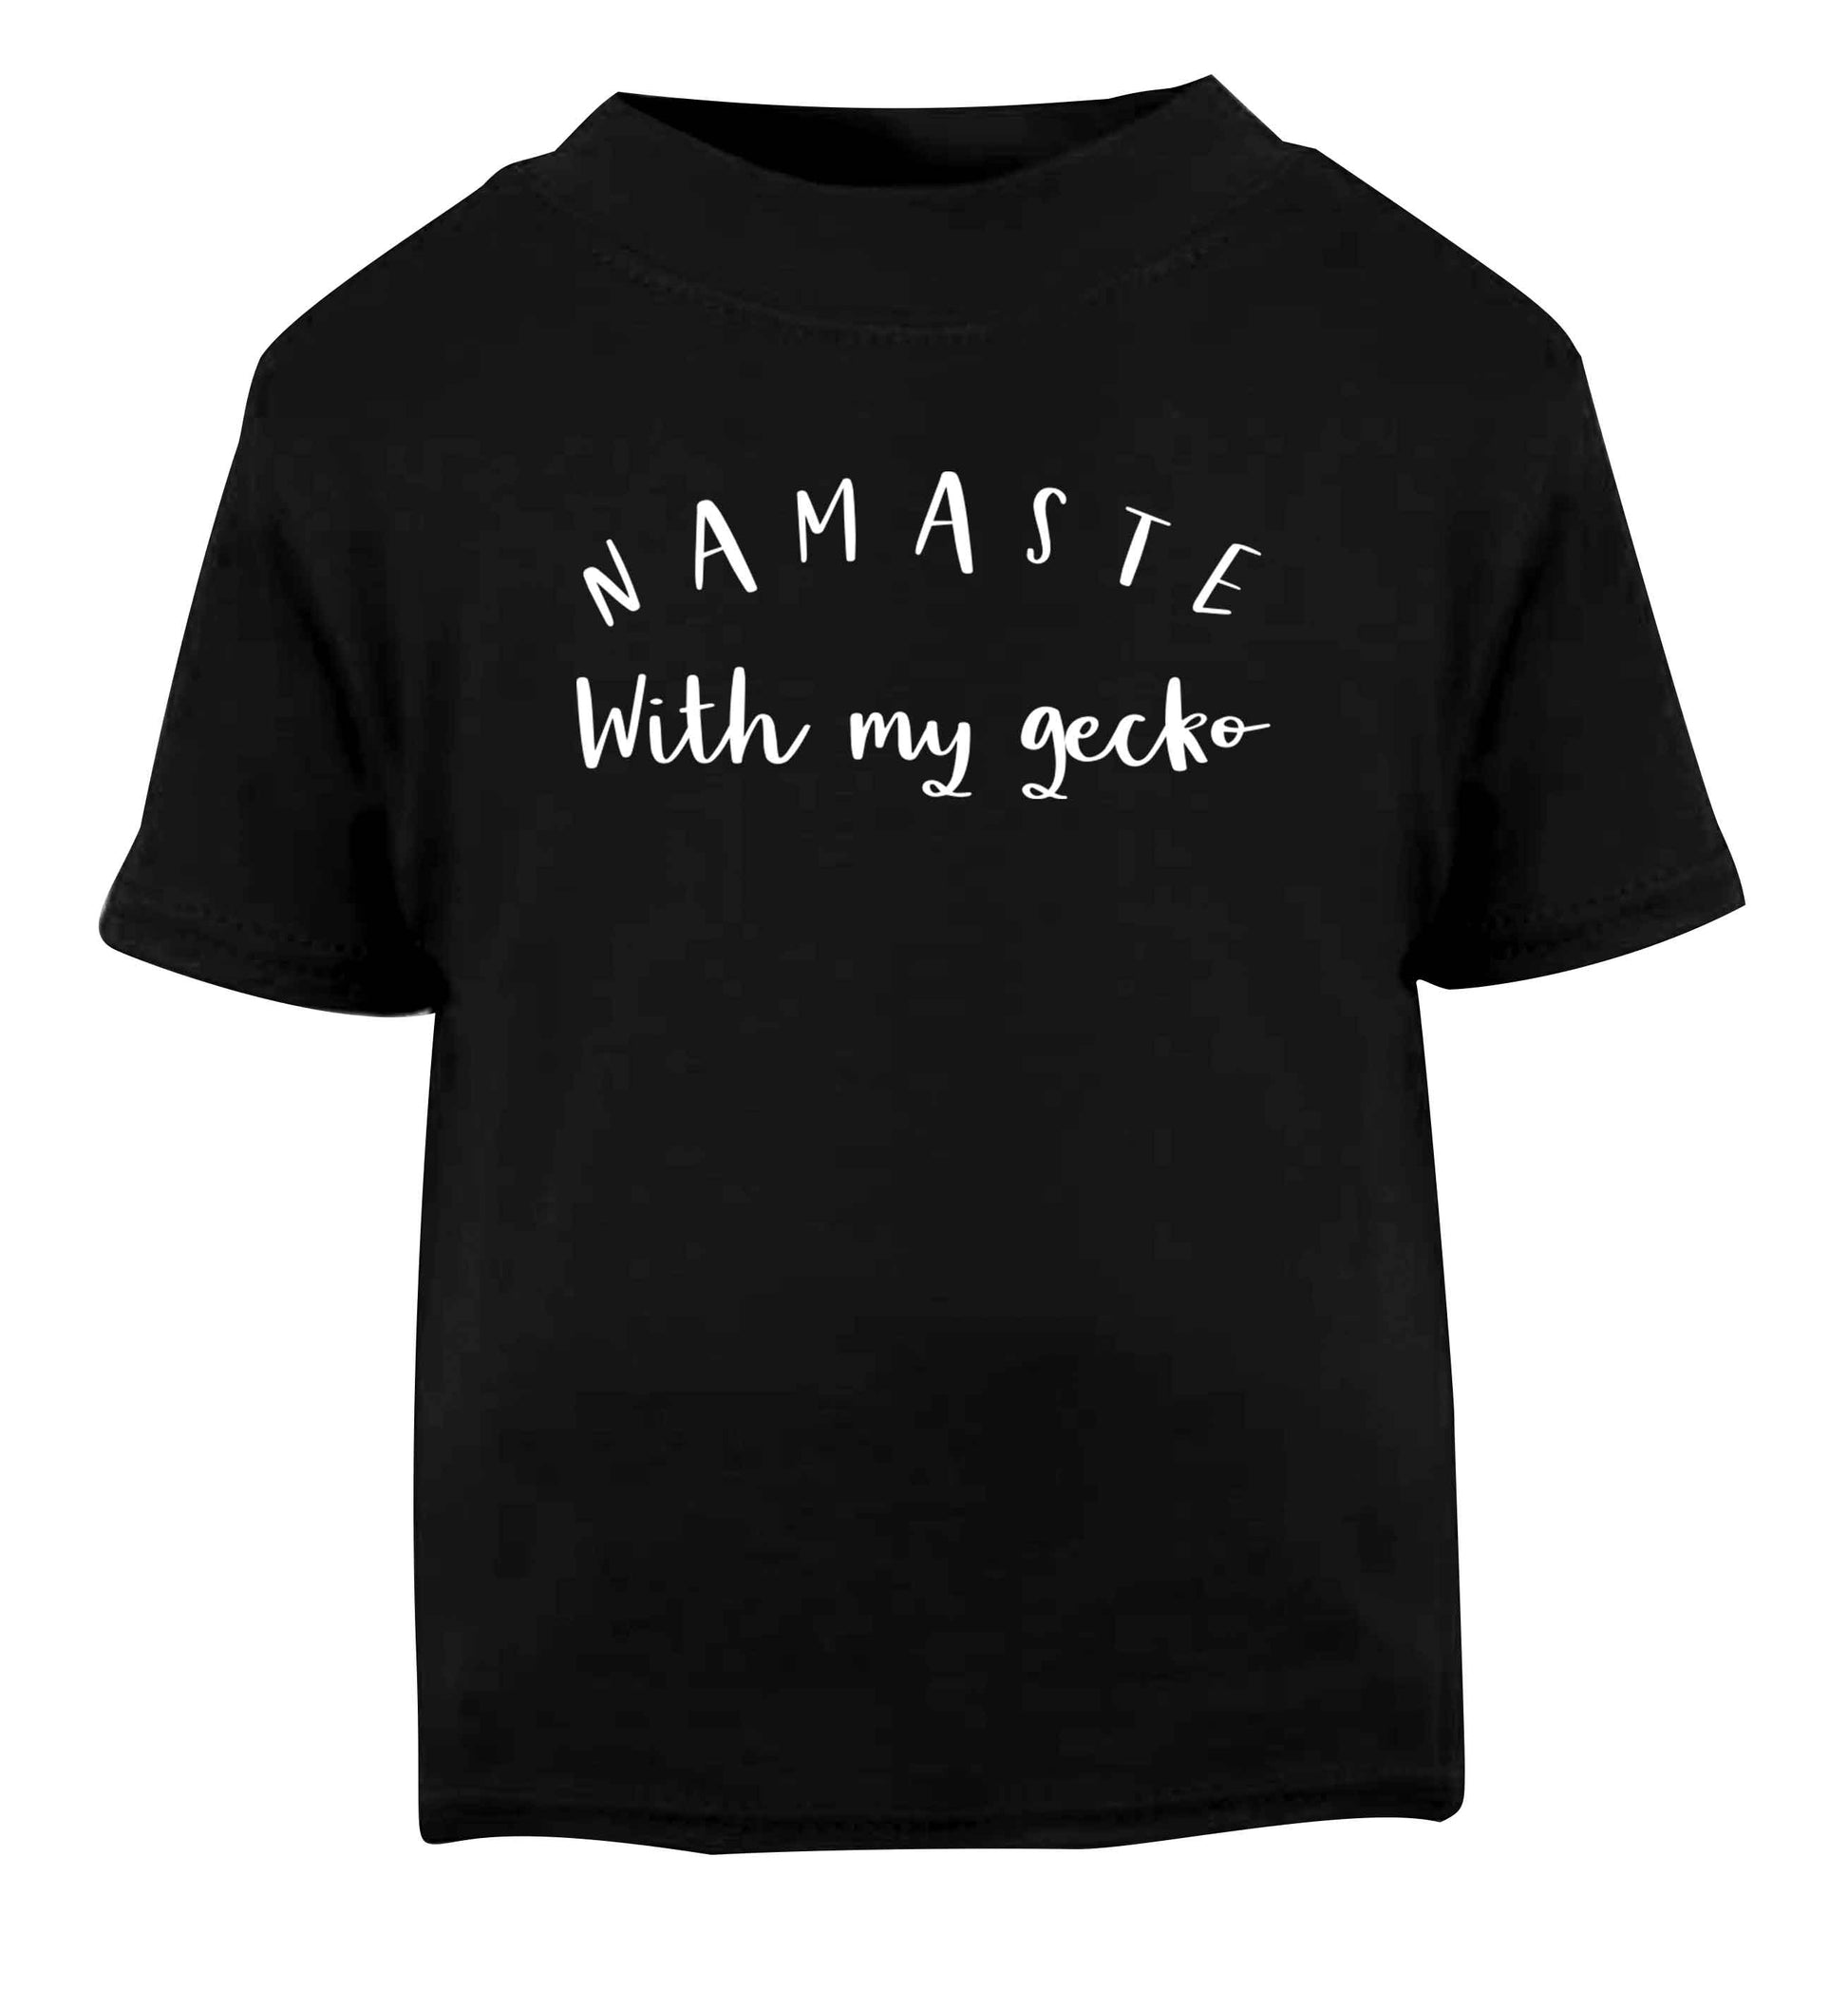 Namaste with my gecko Black Baby Toddler Tshirt 2 years